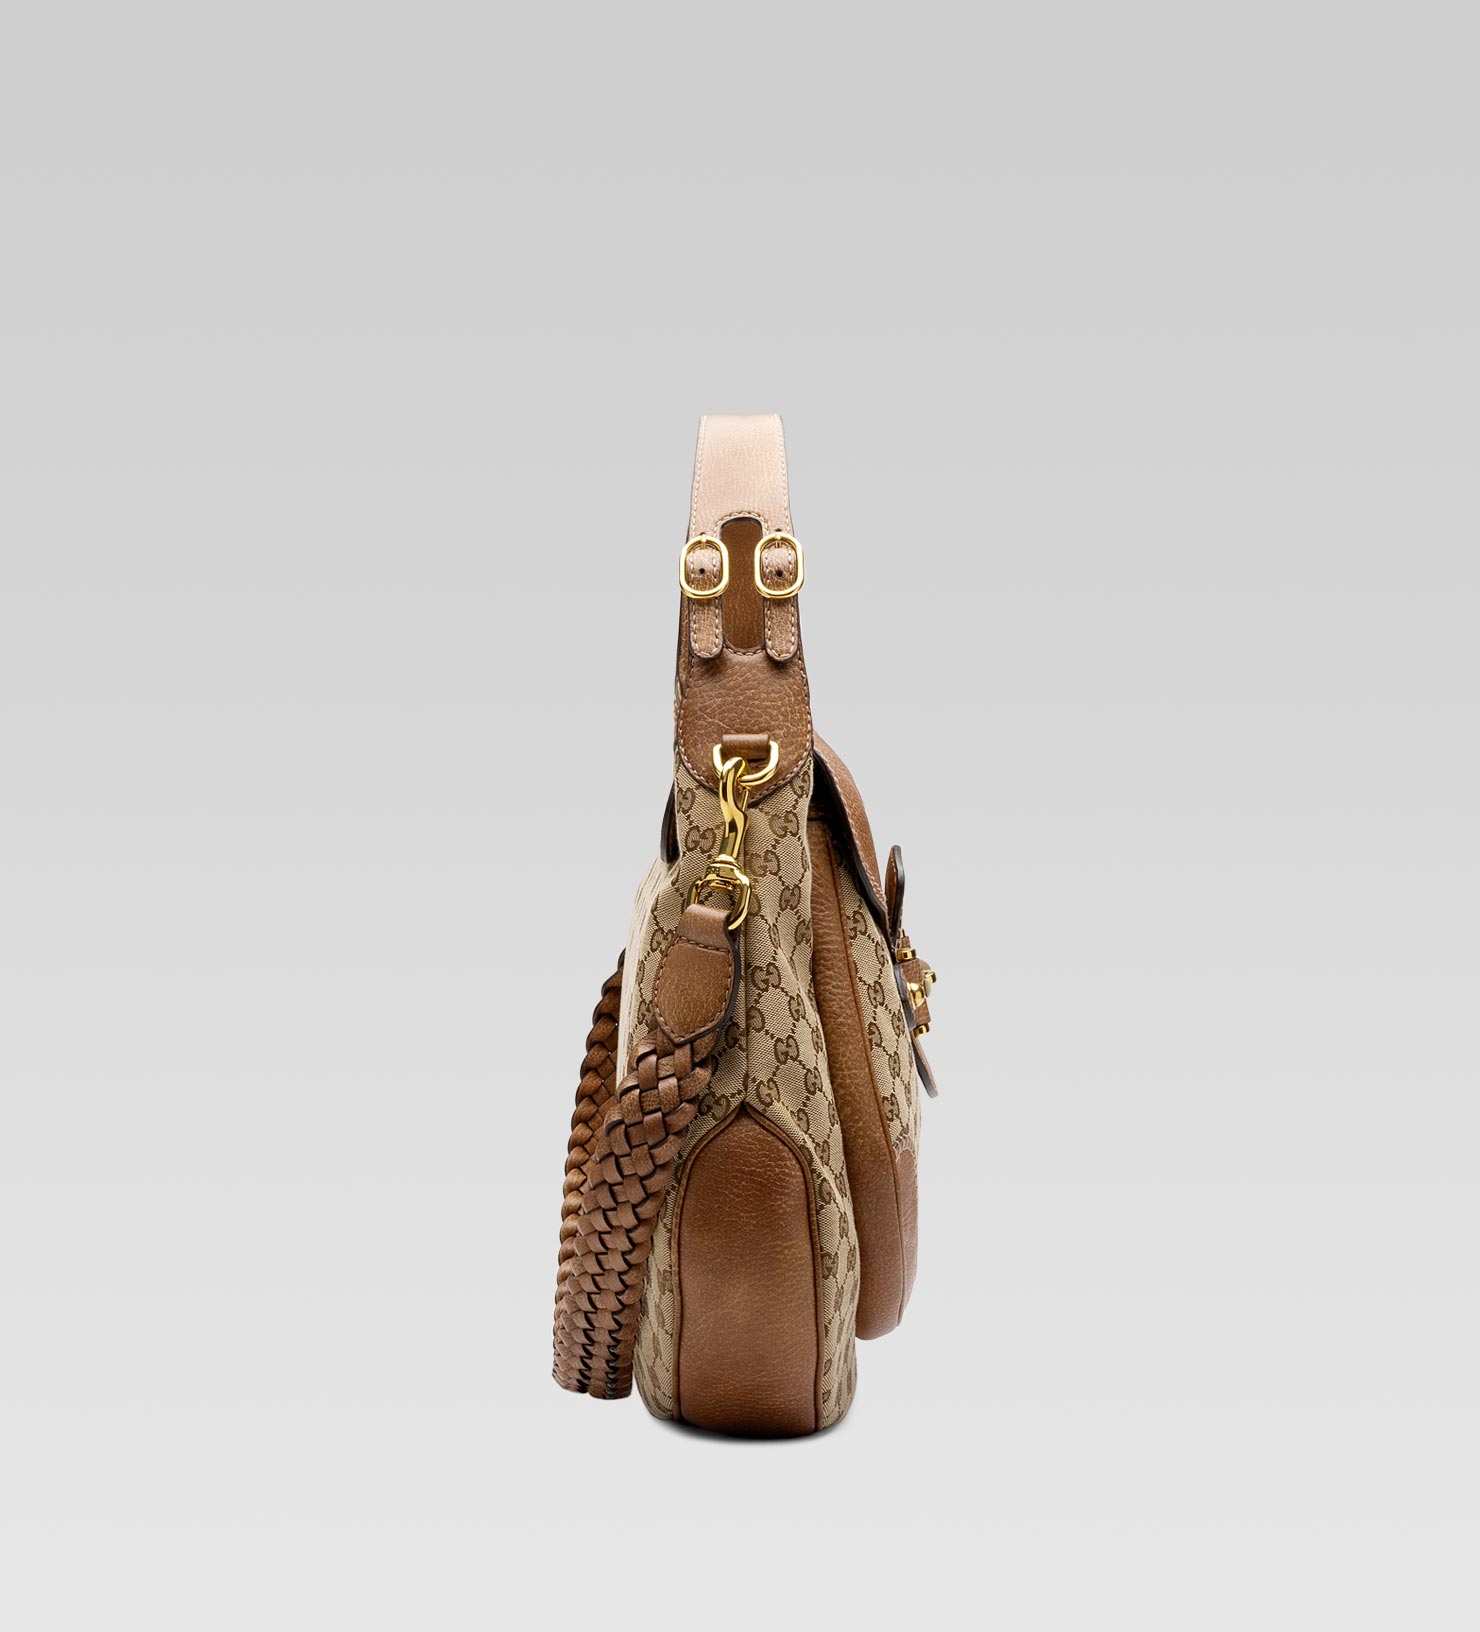 Gucci New Pelham Large Shoulder Bag with Horsebit Detail in Natural | Lyst